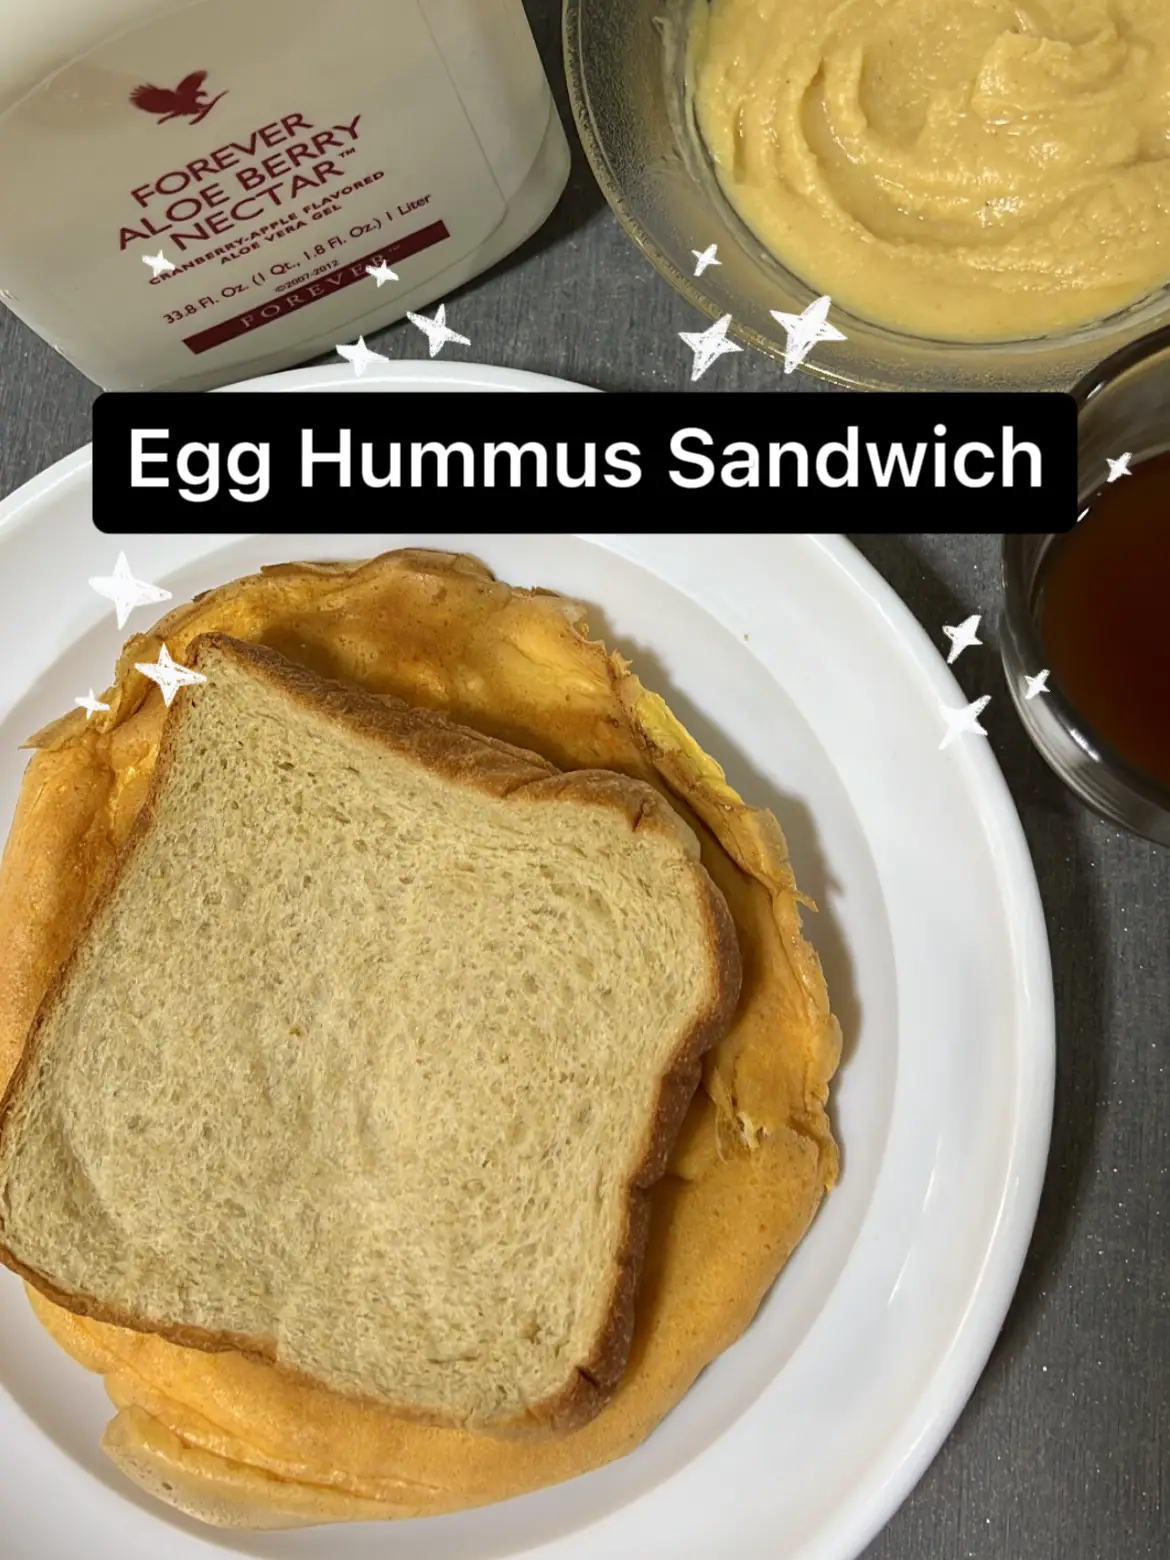 Let’s make Egg Hummus Sandwich 's images